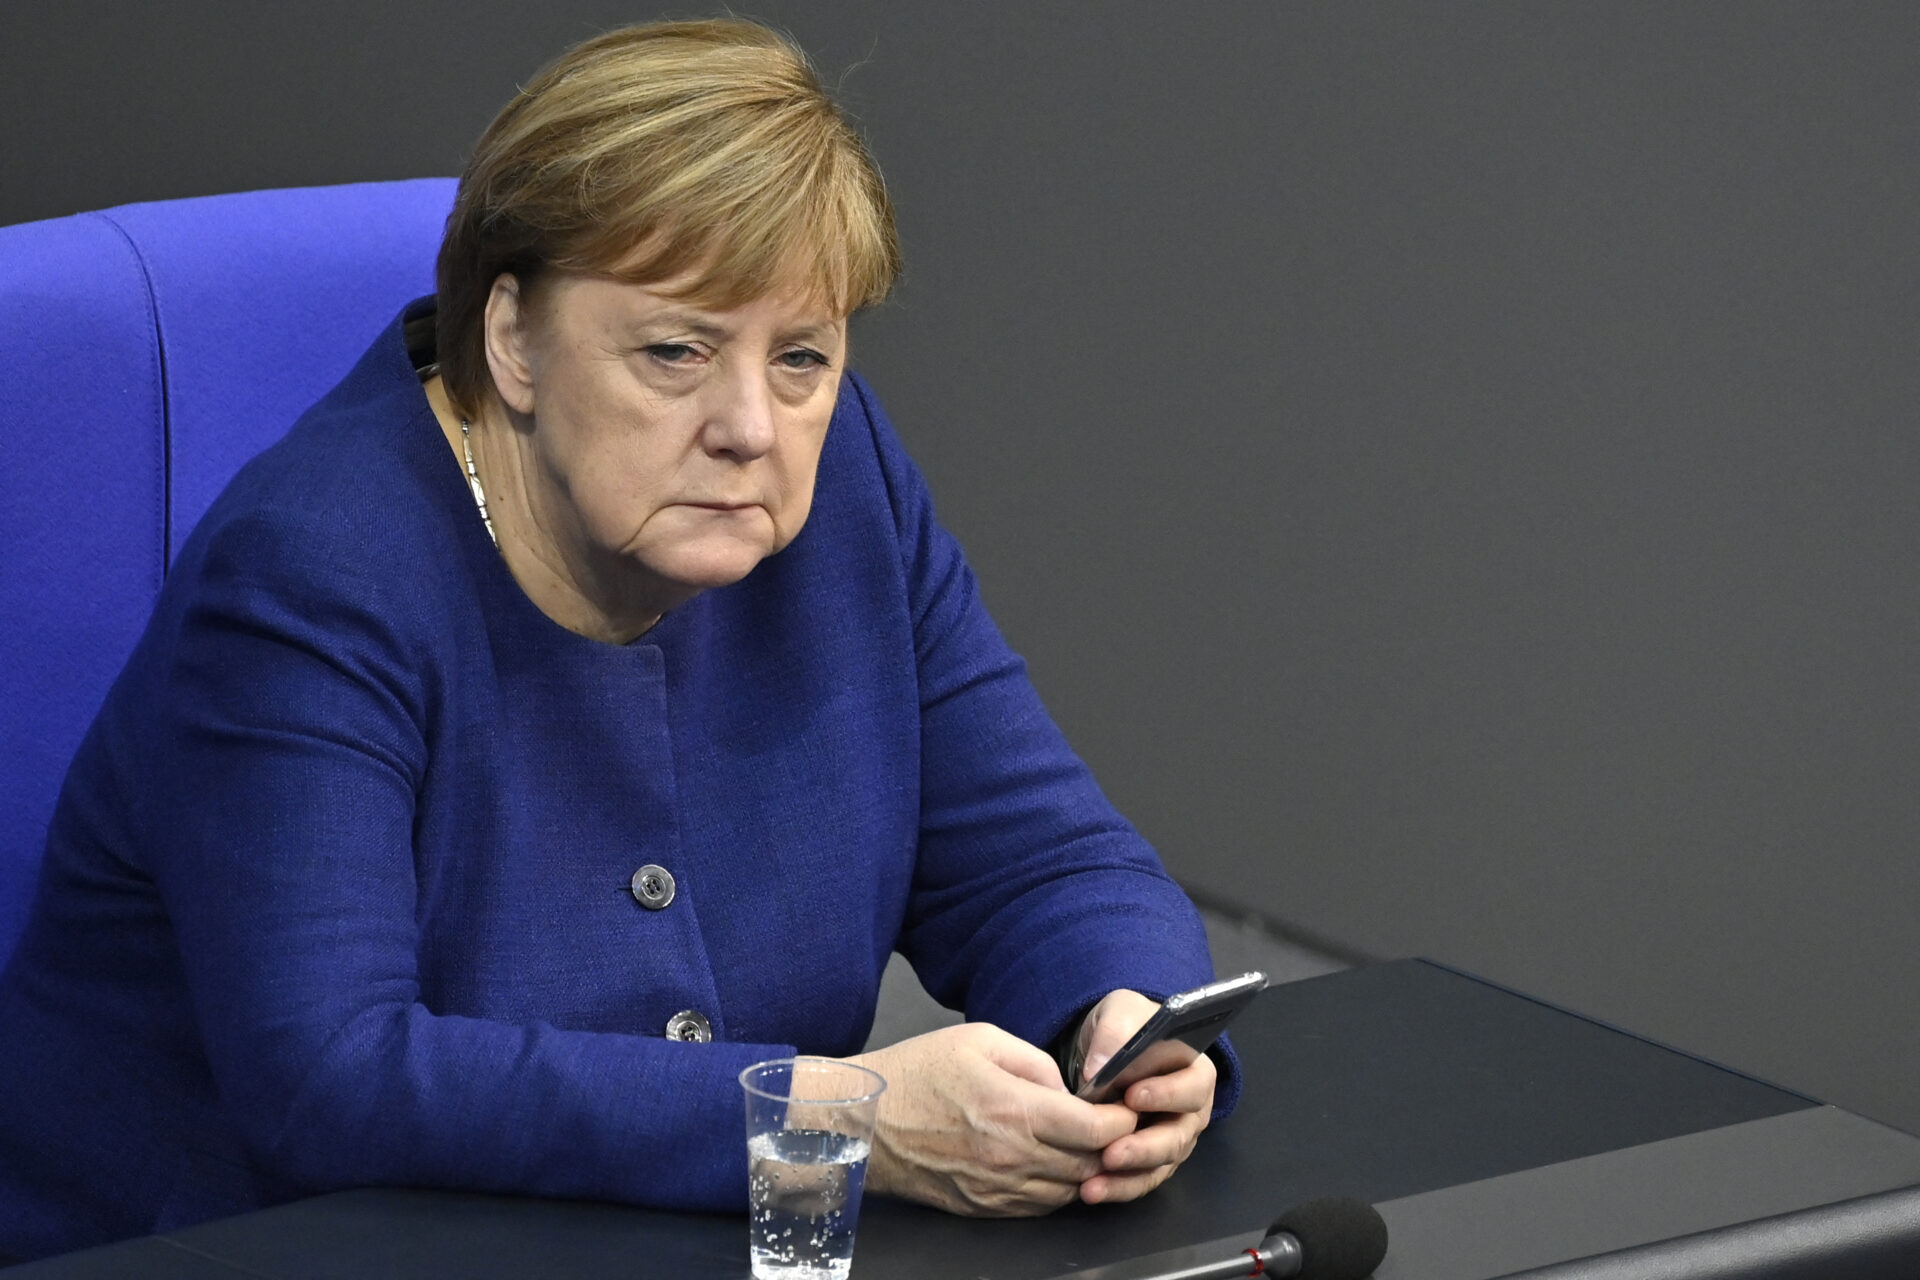 EU espió a Angela Merkel y a otros políticos europeos, revelan medios